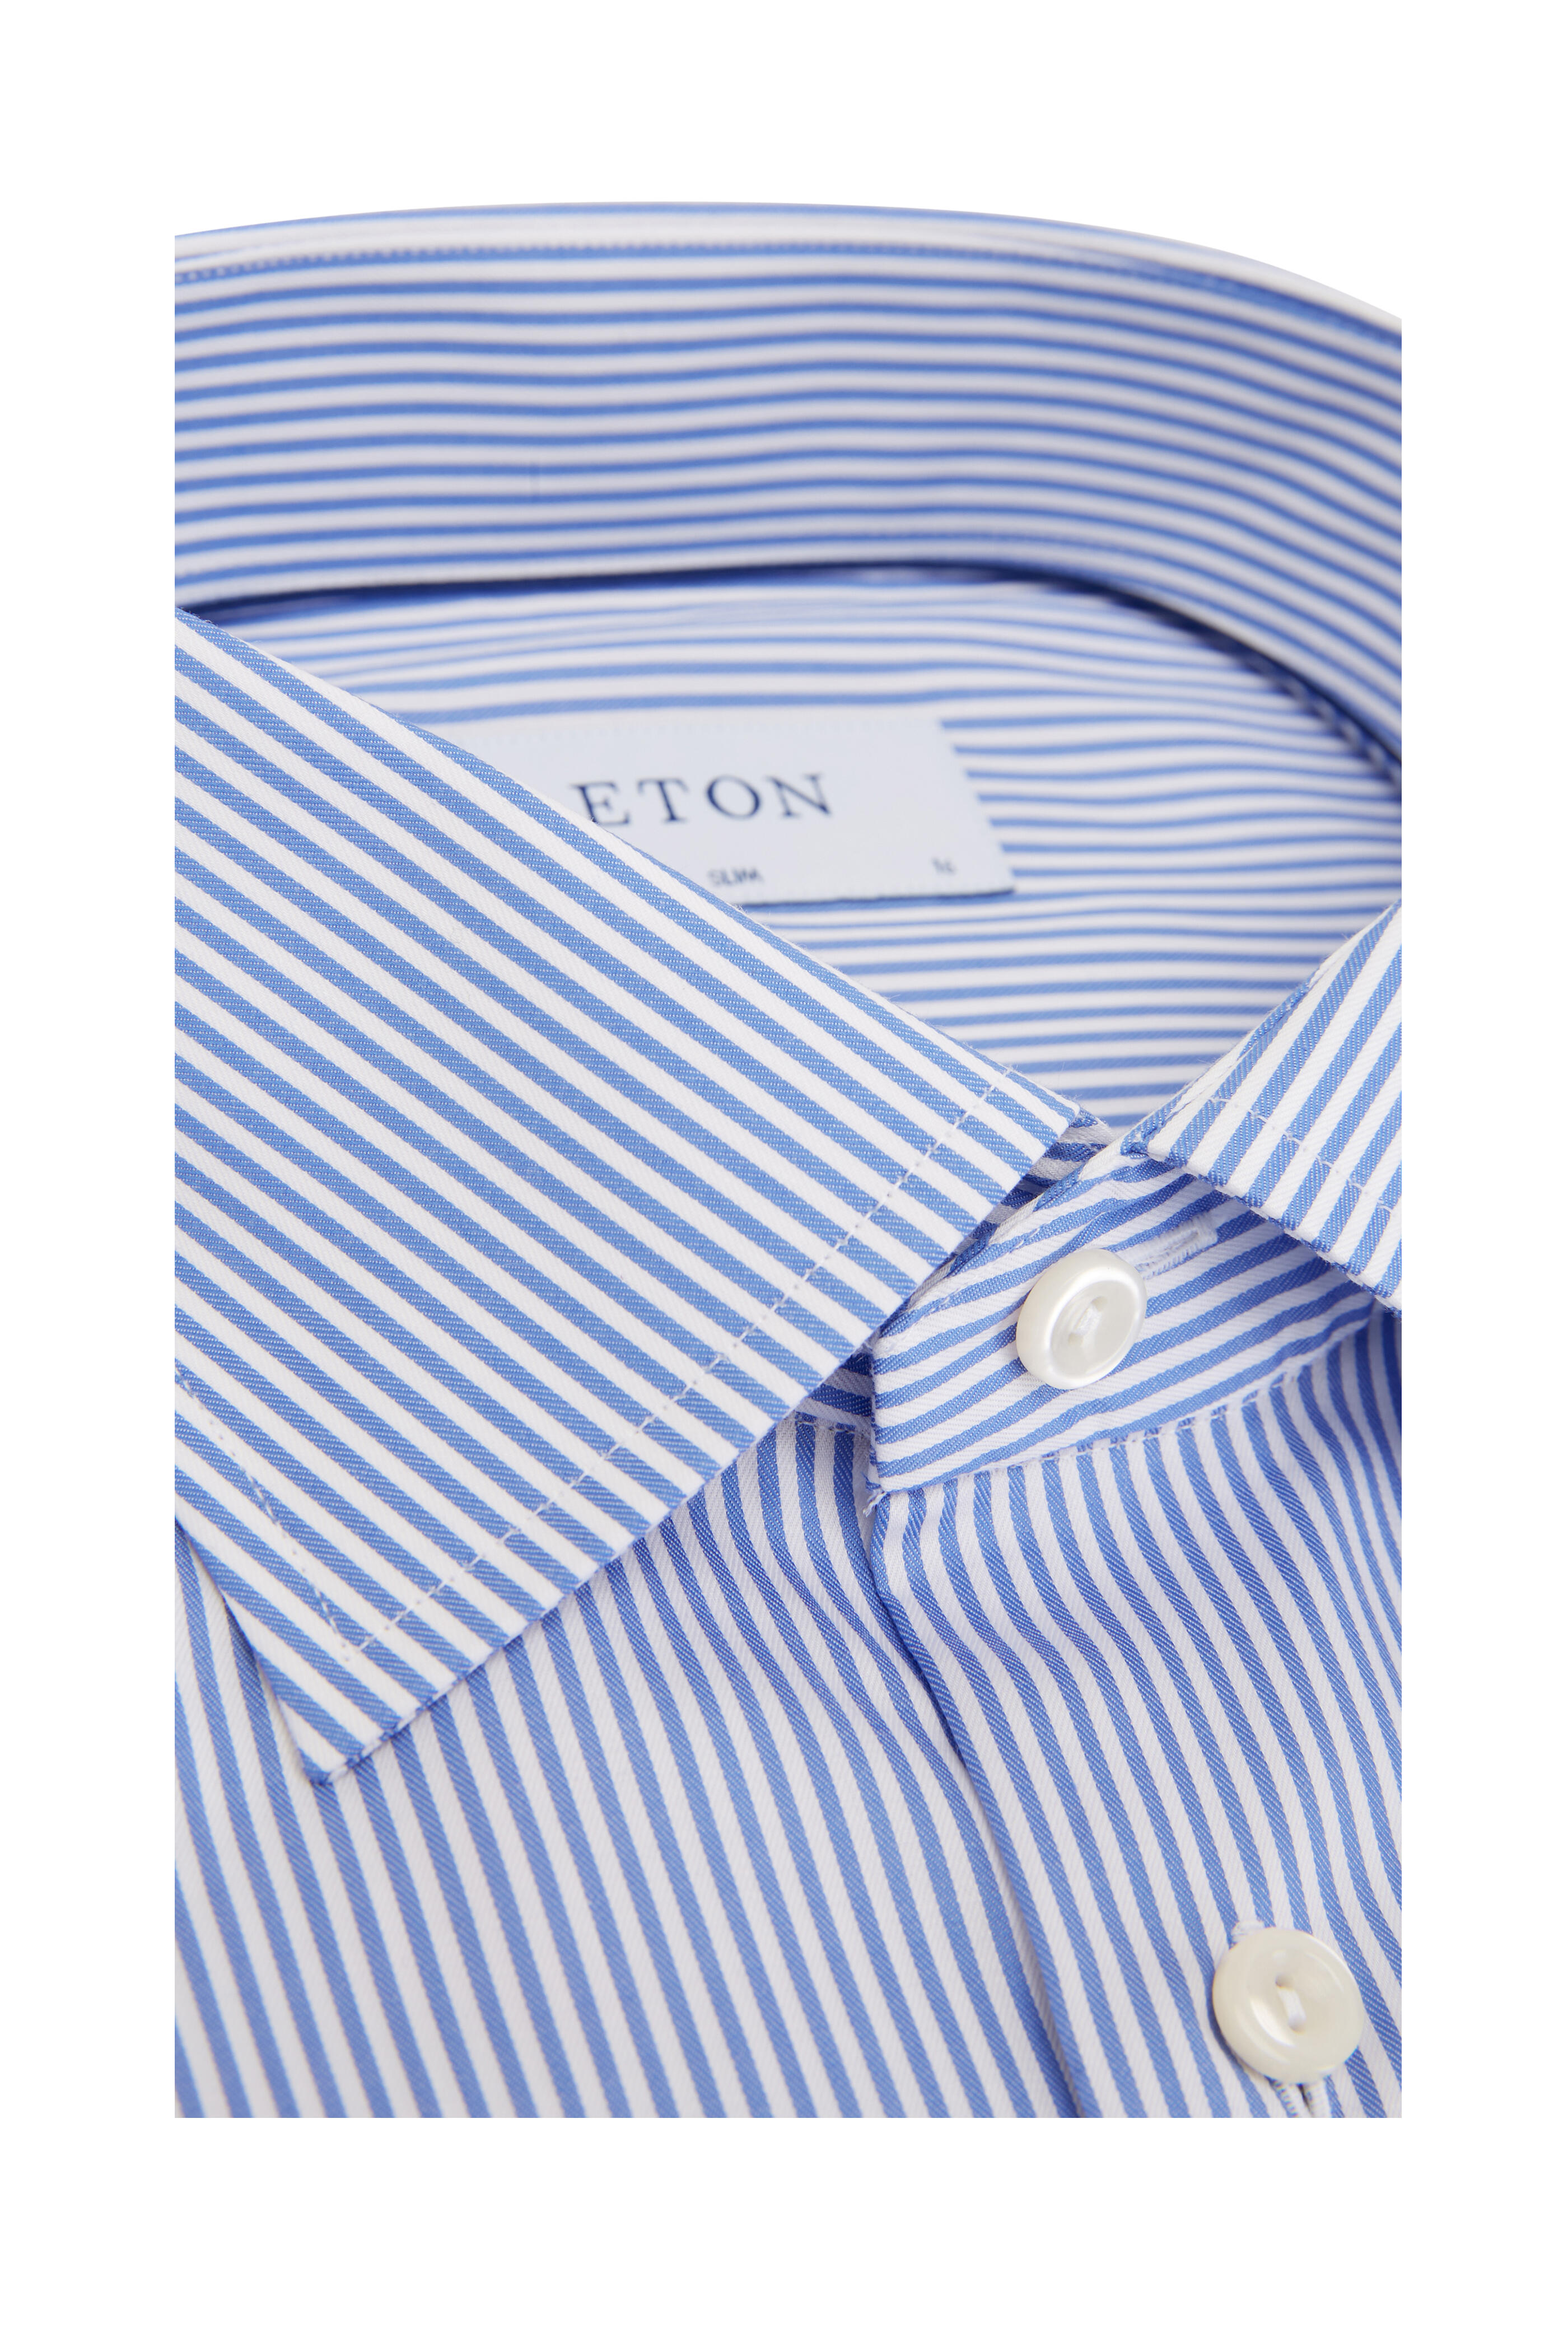 Eton - Royal Blue & White Stripe Dress Shirt | Mitchell Stores